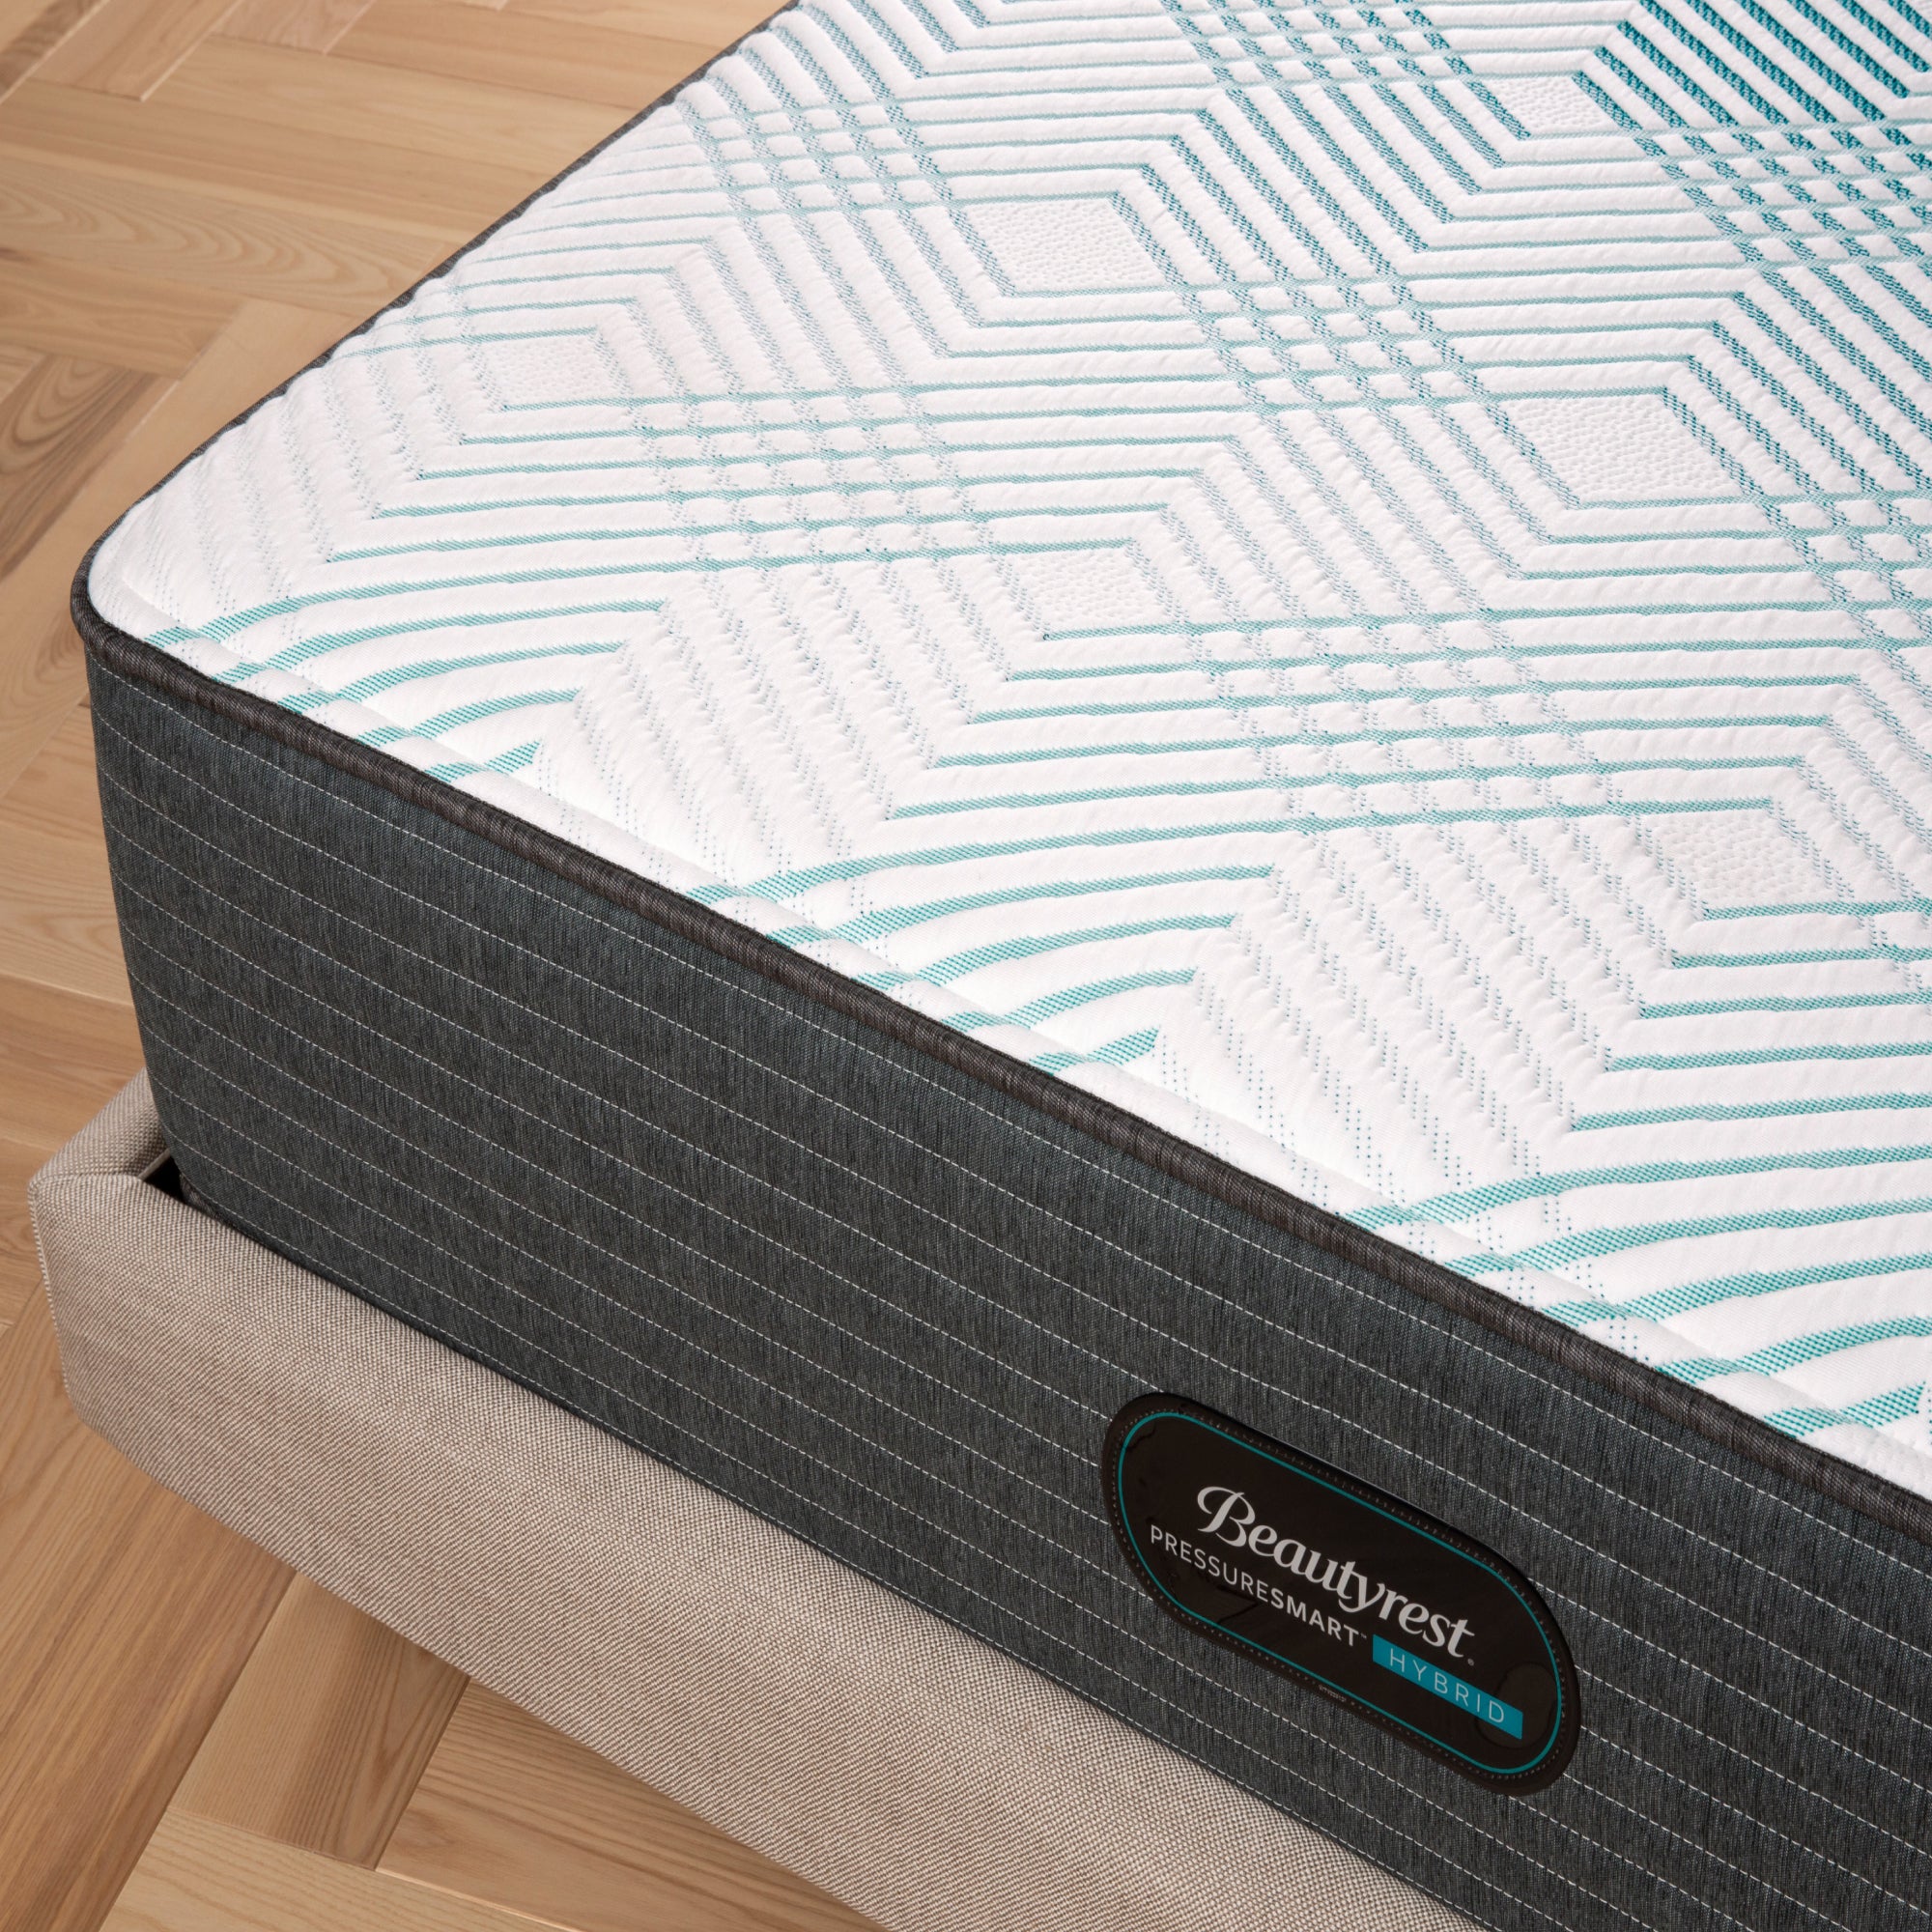 Corner view of the Beautyrest PressureSmart mattress in a bedroom||feel: medium||series: hybrid